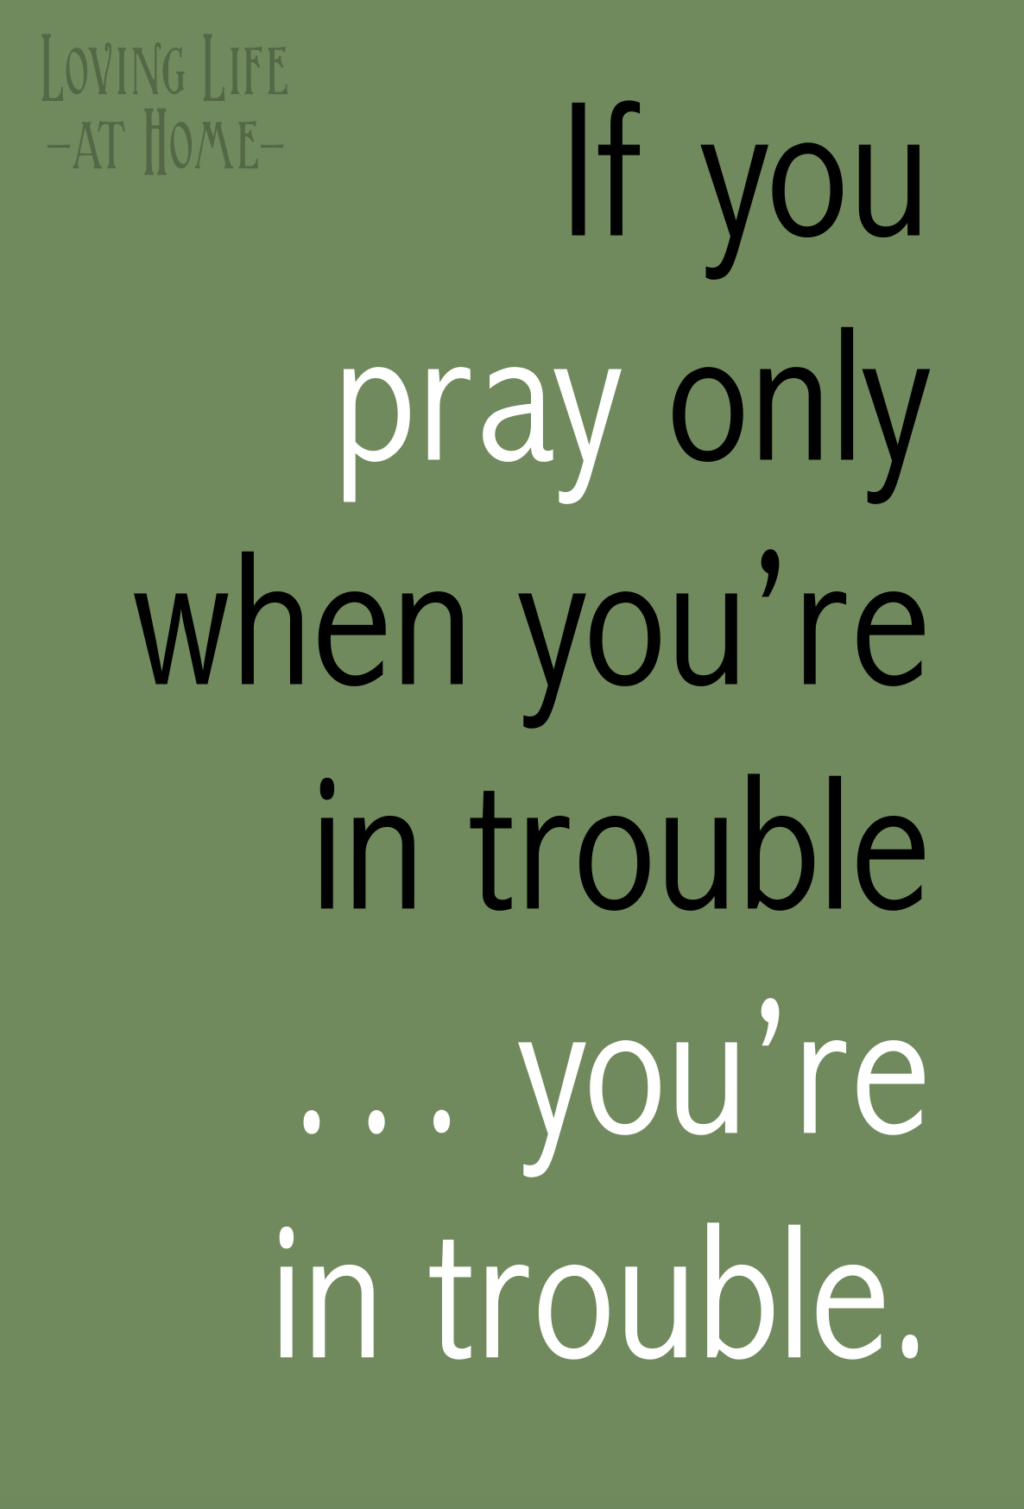 Prayer is Daily Lifeline